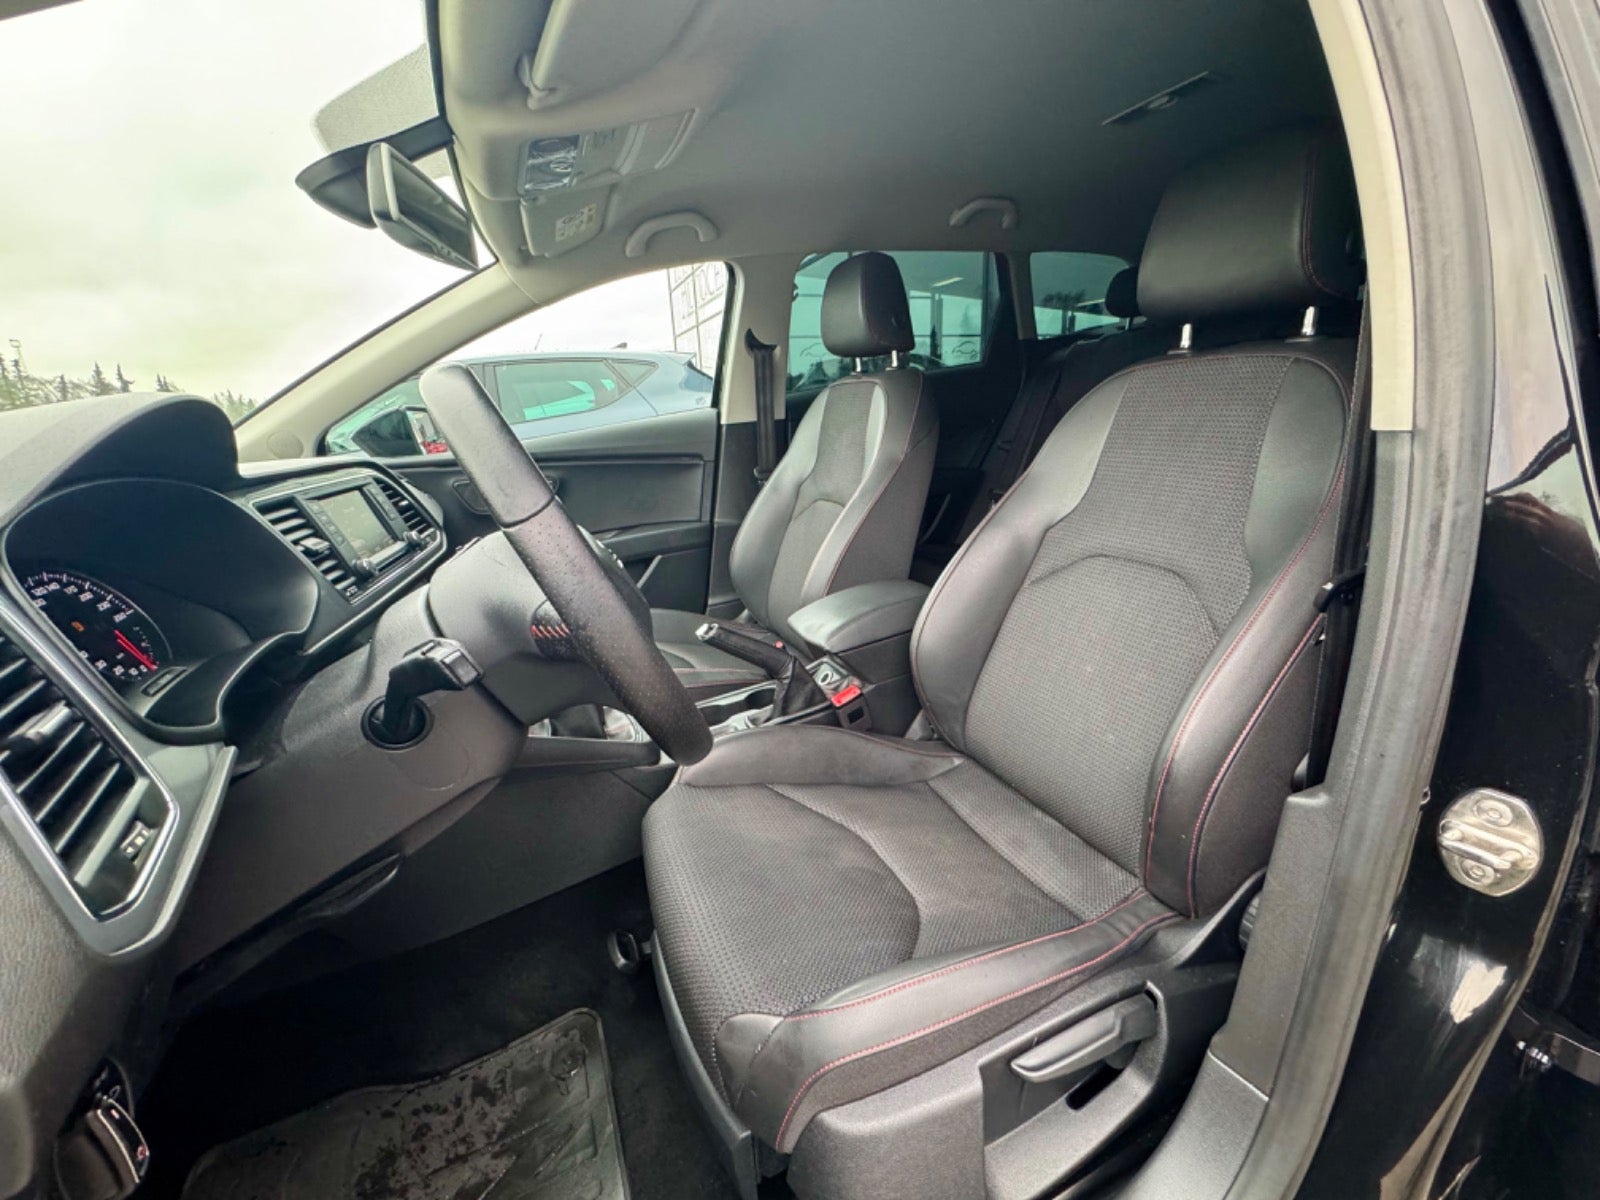 Seat Leon 2,0 TDi 150 FR ST eco Diesel modelår 2015 km 289000